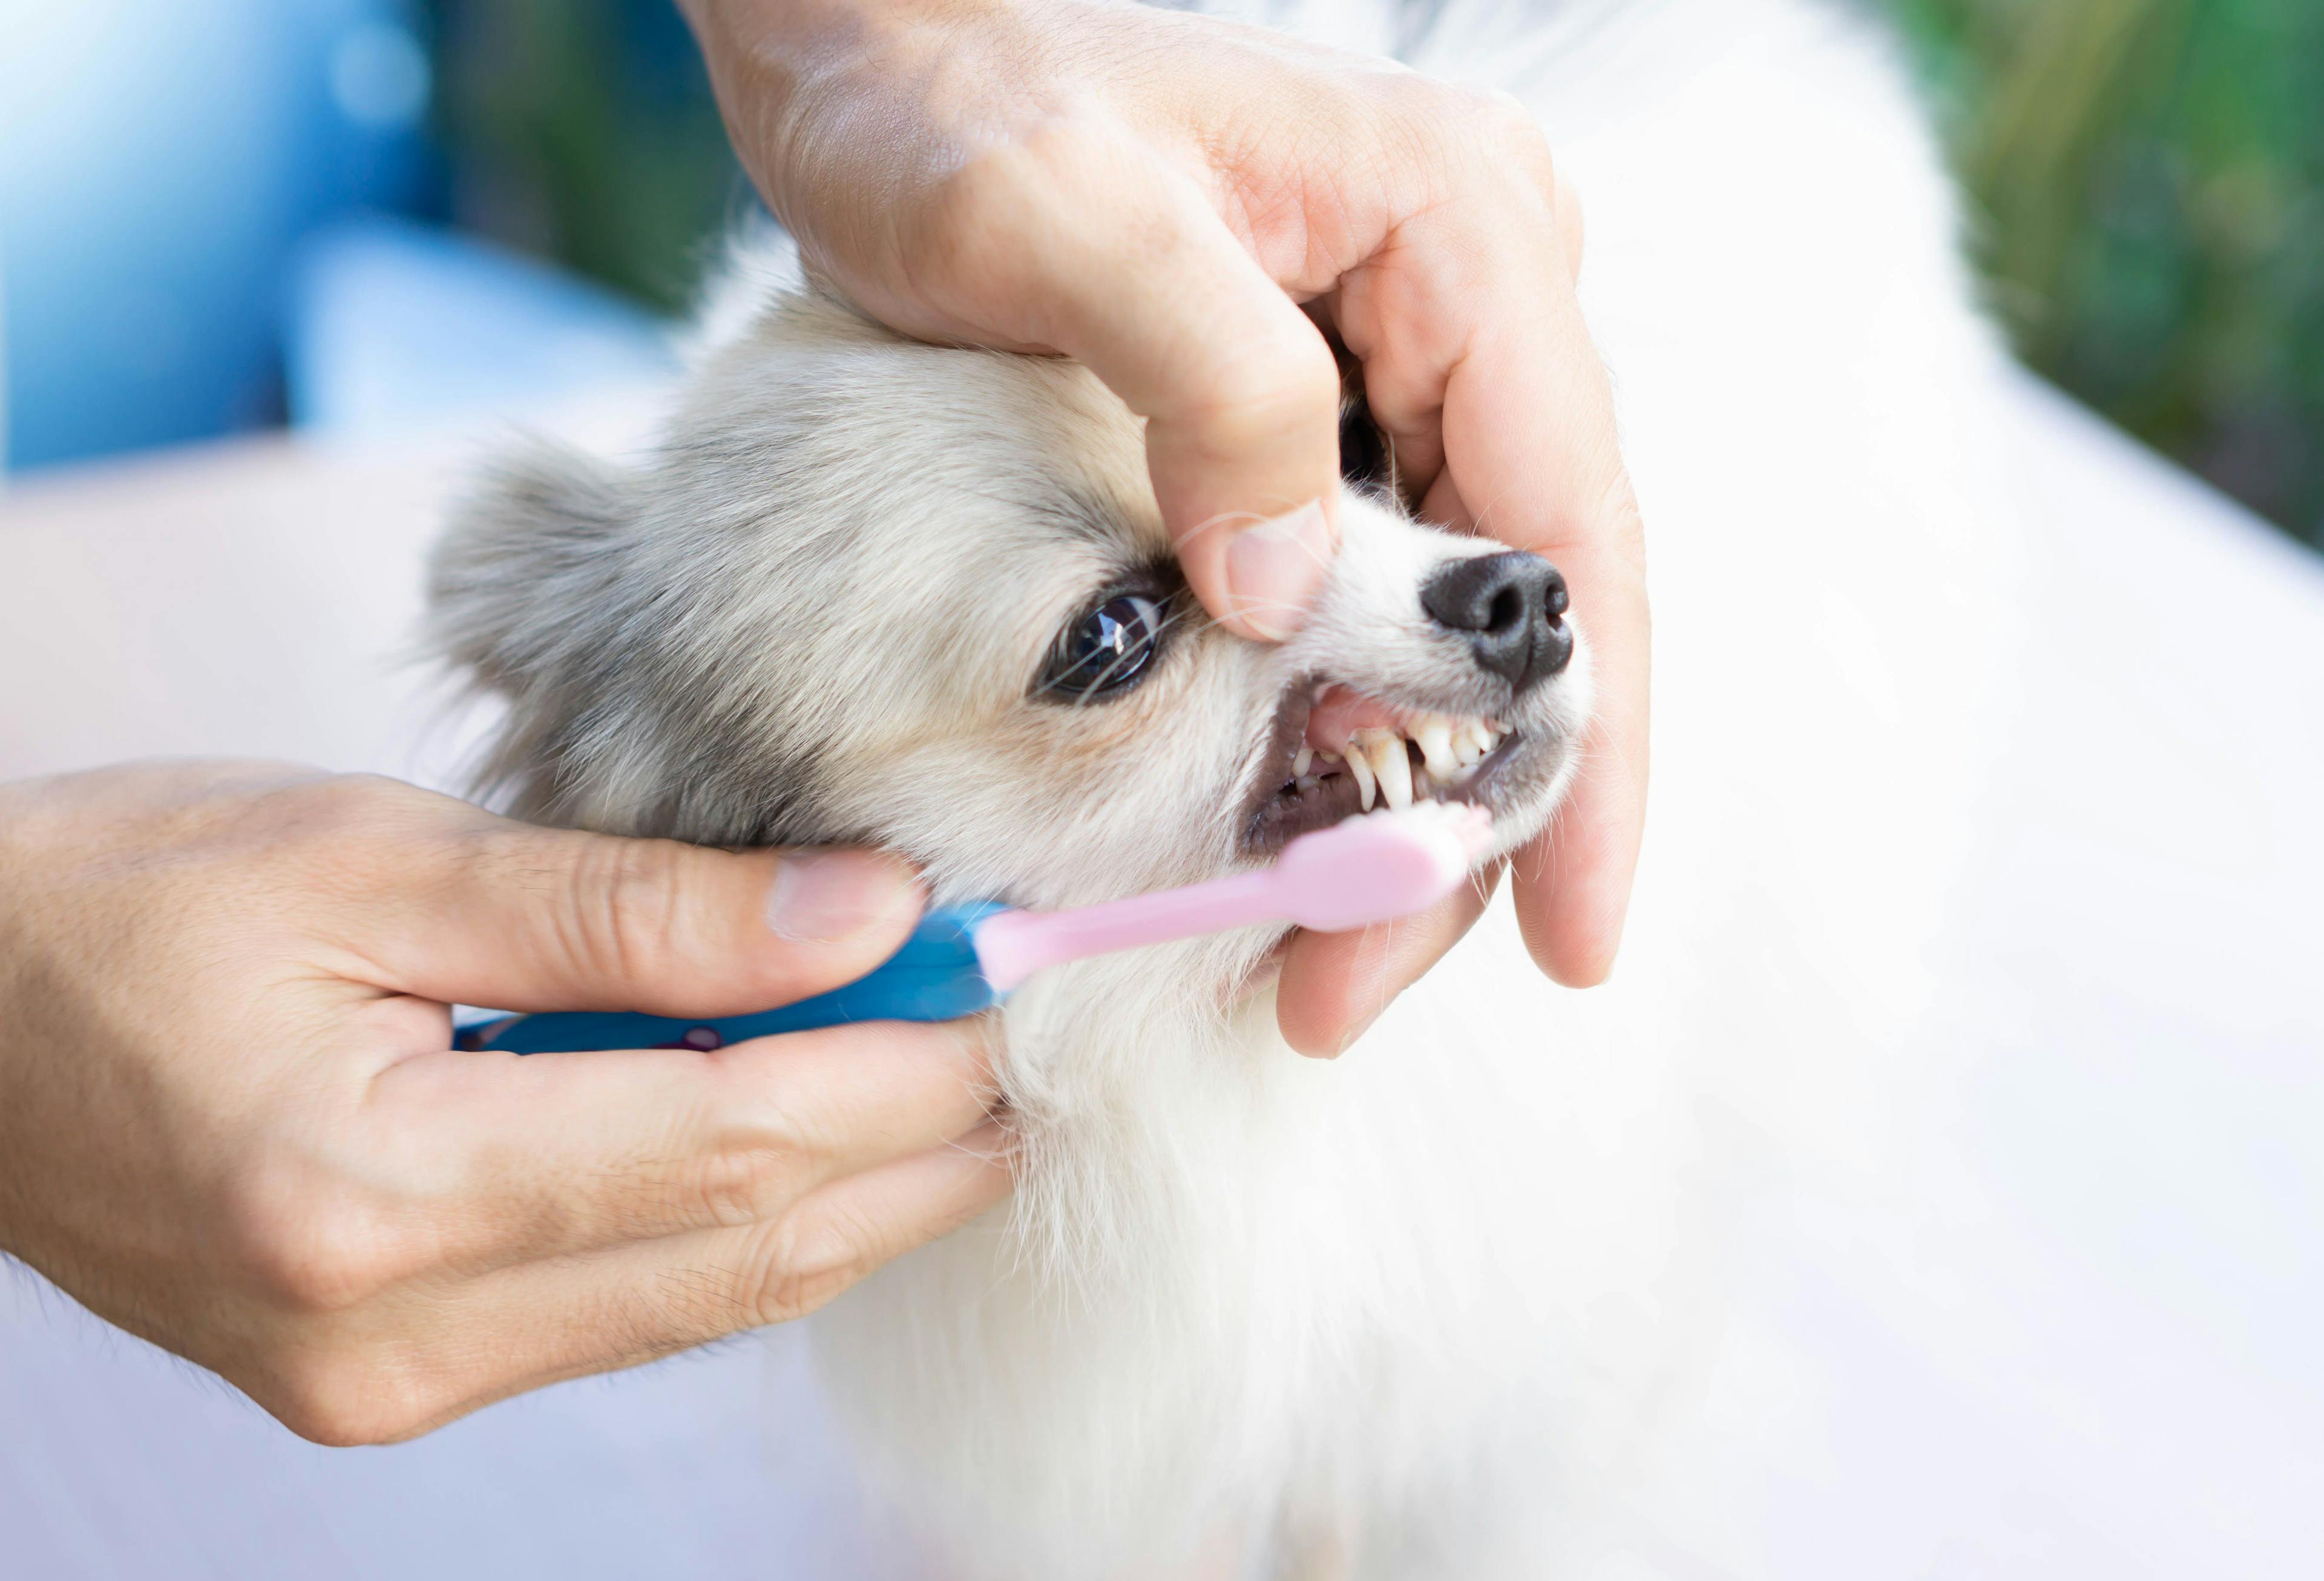 Person brushing a dog's teeth / mraoraor